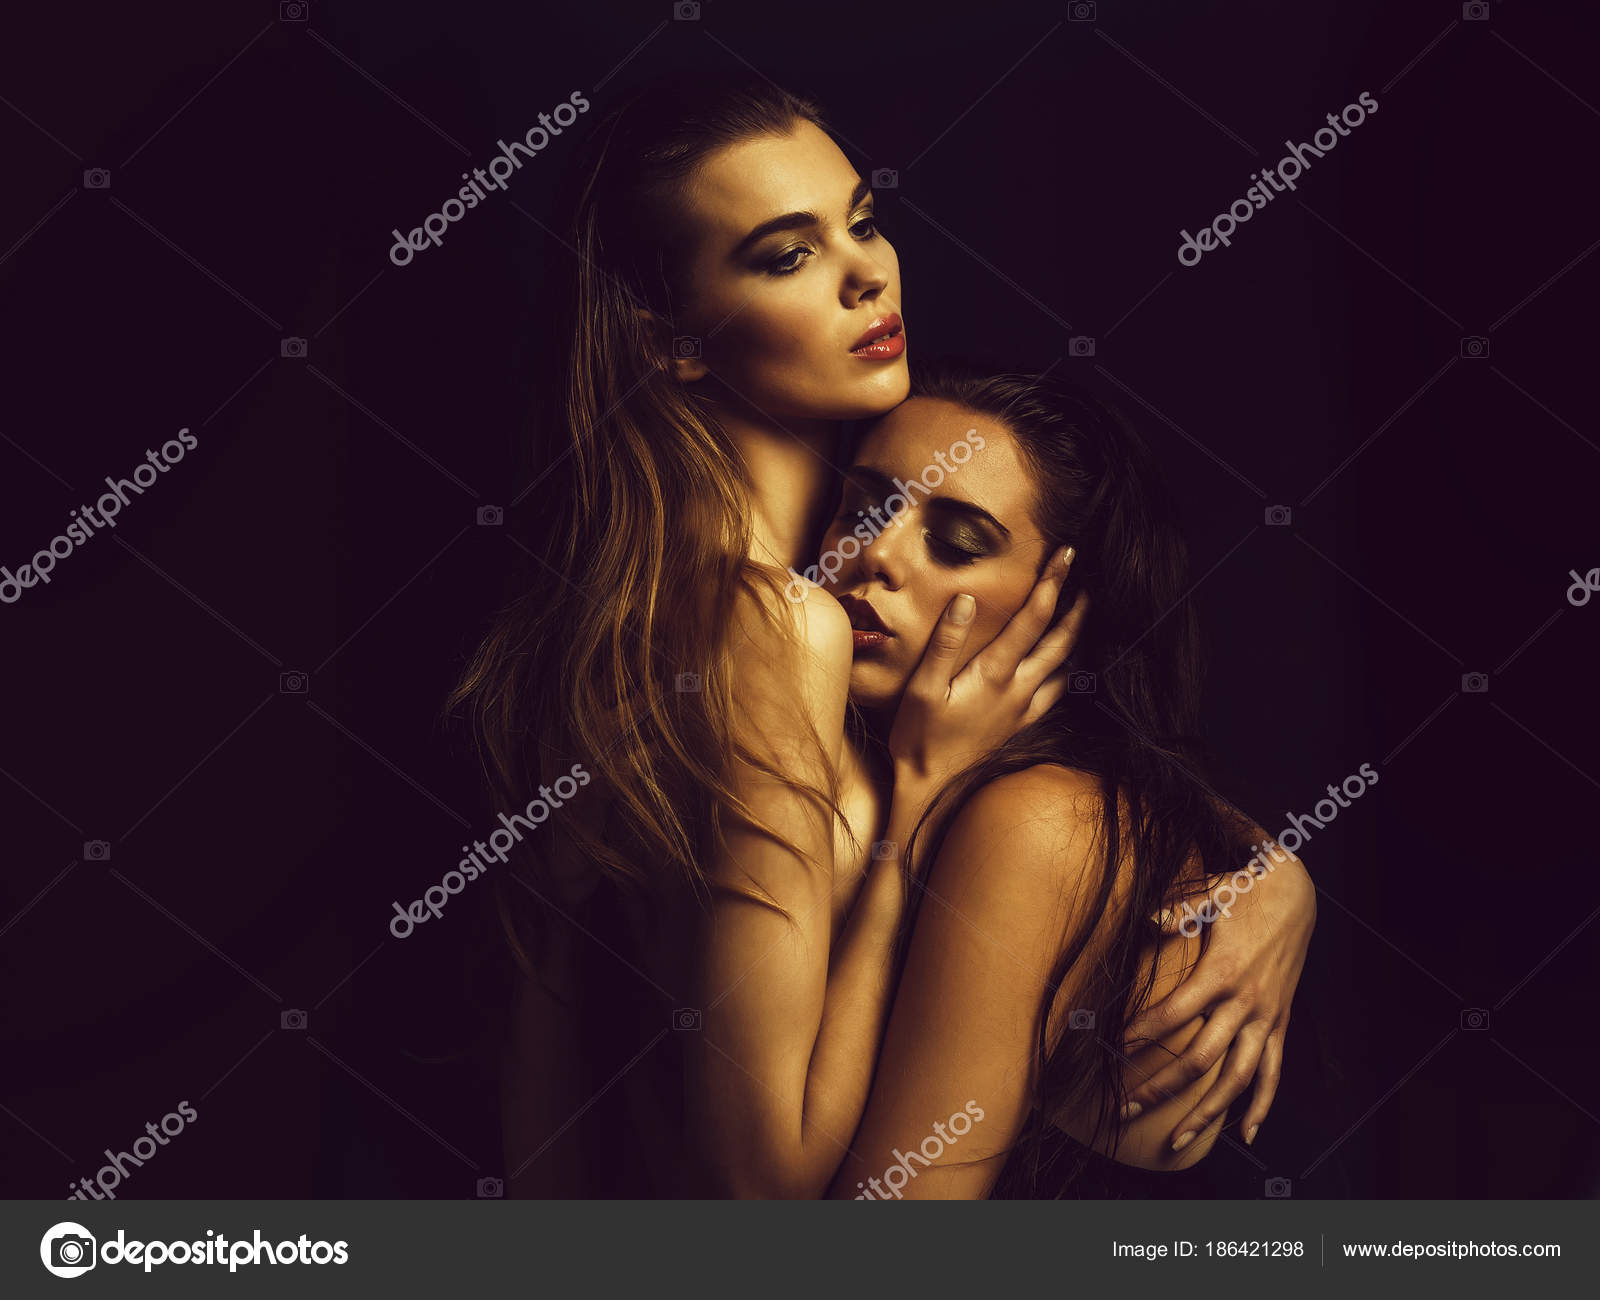 Lesbian Homosexual Romance Love Seduction Sex Beauty Fashion Salon Spa Stock Photo by ©Tverdohlib 186421298 picture